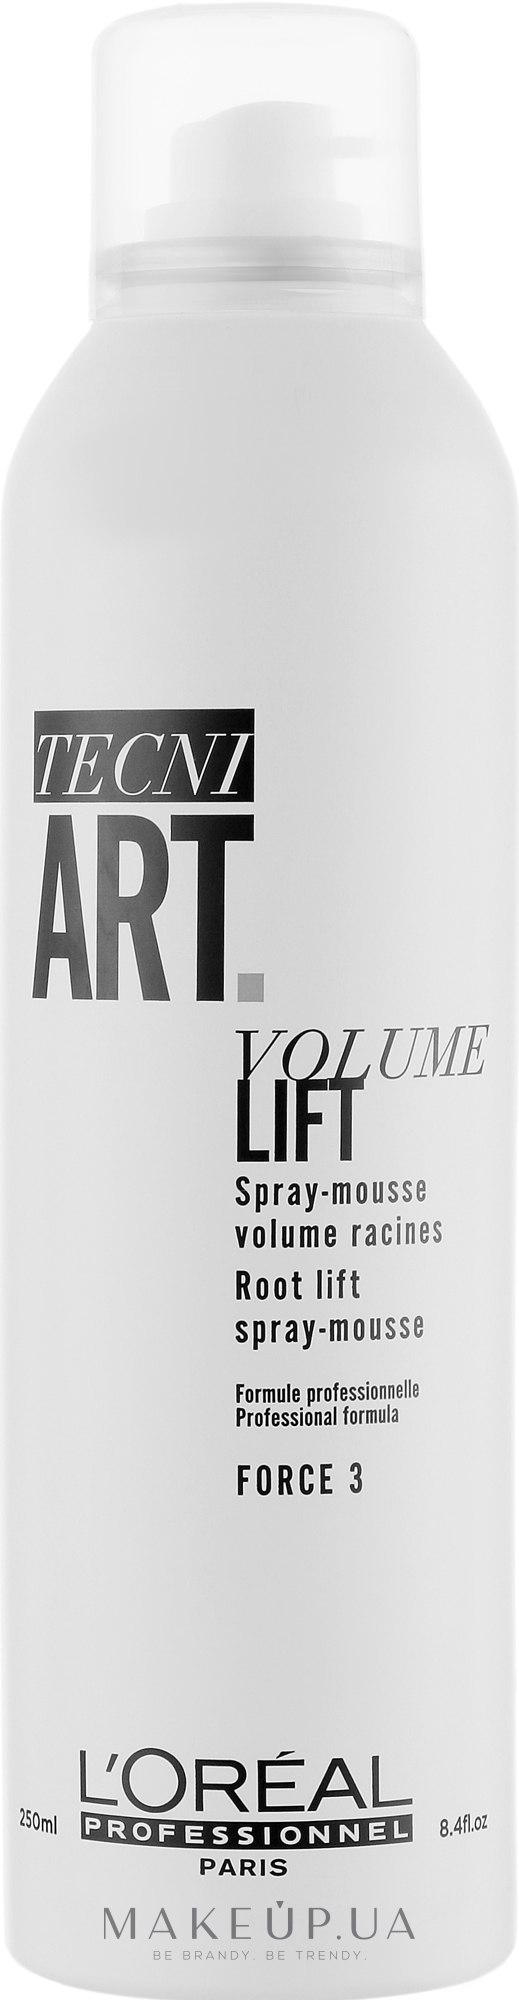 Мус-спрей для прикореневого об'єму - L'Oreal Professionnel Tecni.art Volume Lift — фото 250ml